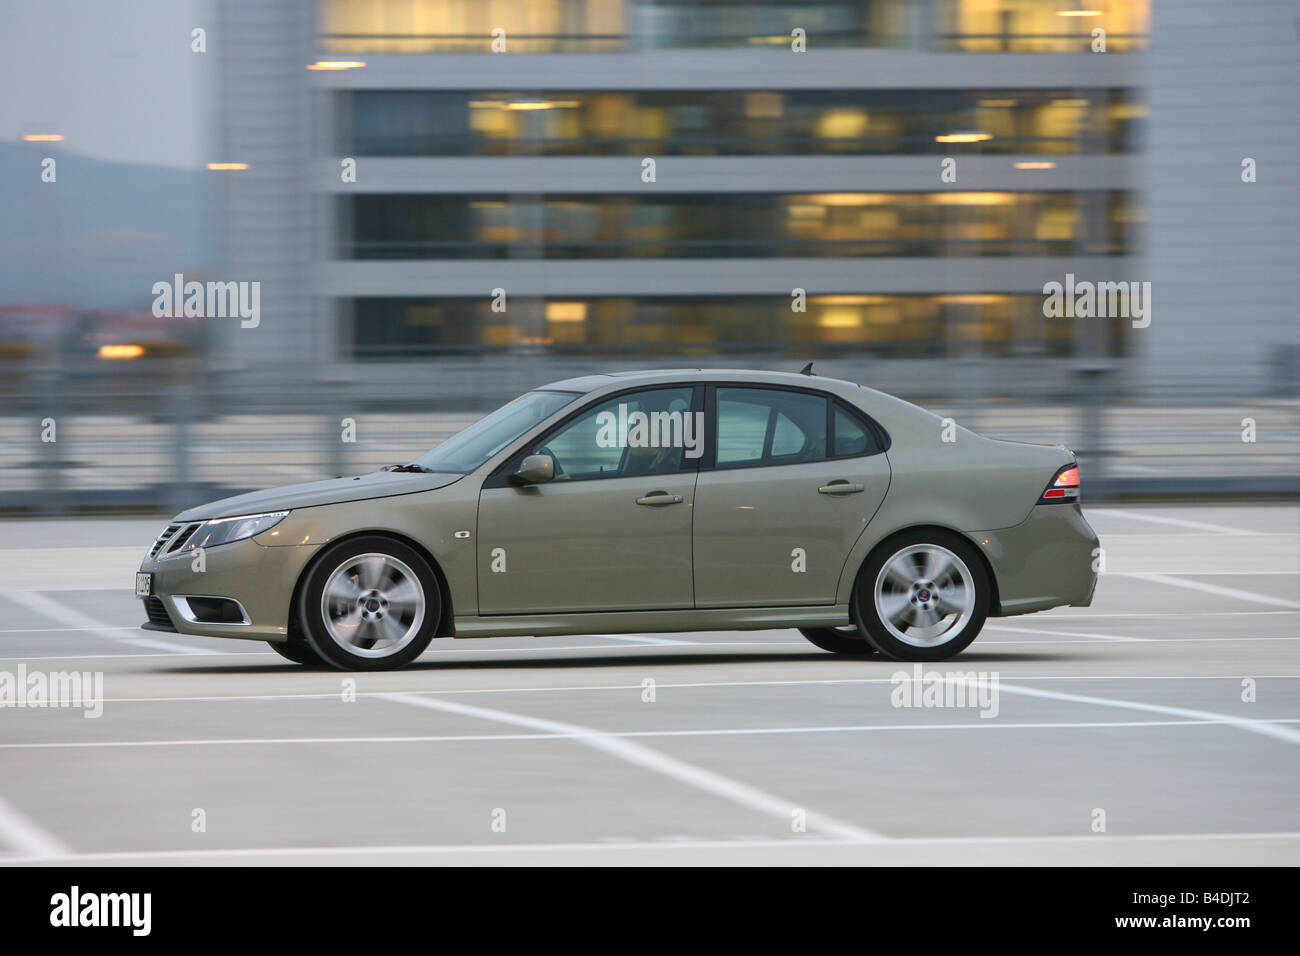 Saab 9-3 2.8 Turbo V6 Aero, model year 2007-, driving, moving, side view, City, Car park Stock Photo